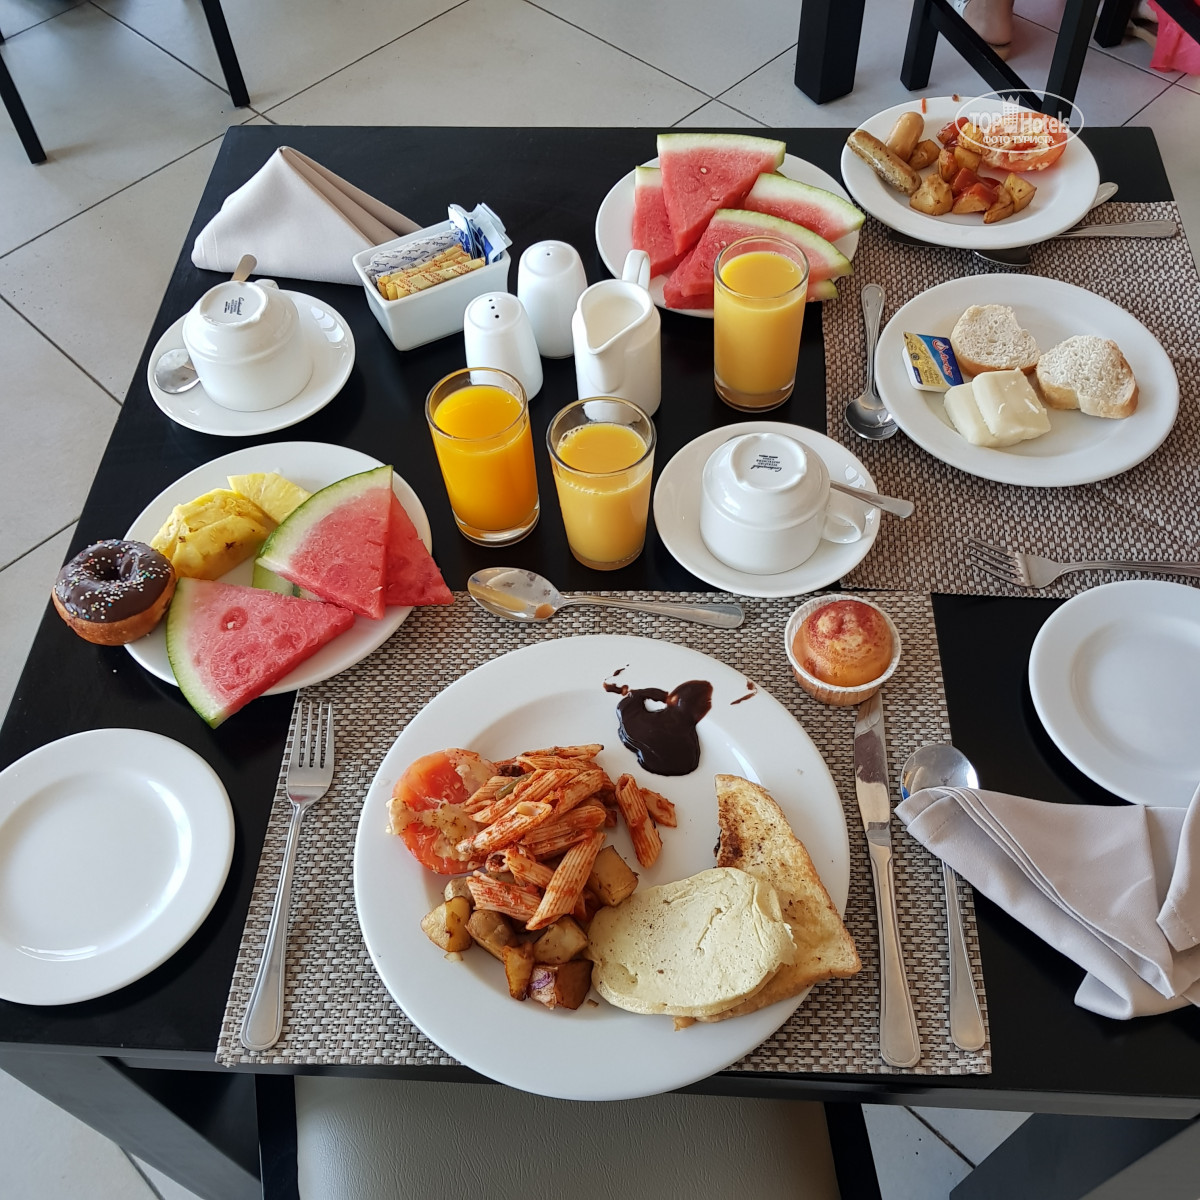 Обед в гостинице. Завтрак в отеле. Завтраки в отелях. Завтраки гостиничные. Континентальный завтрак в отеле.